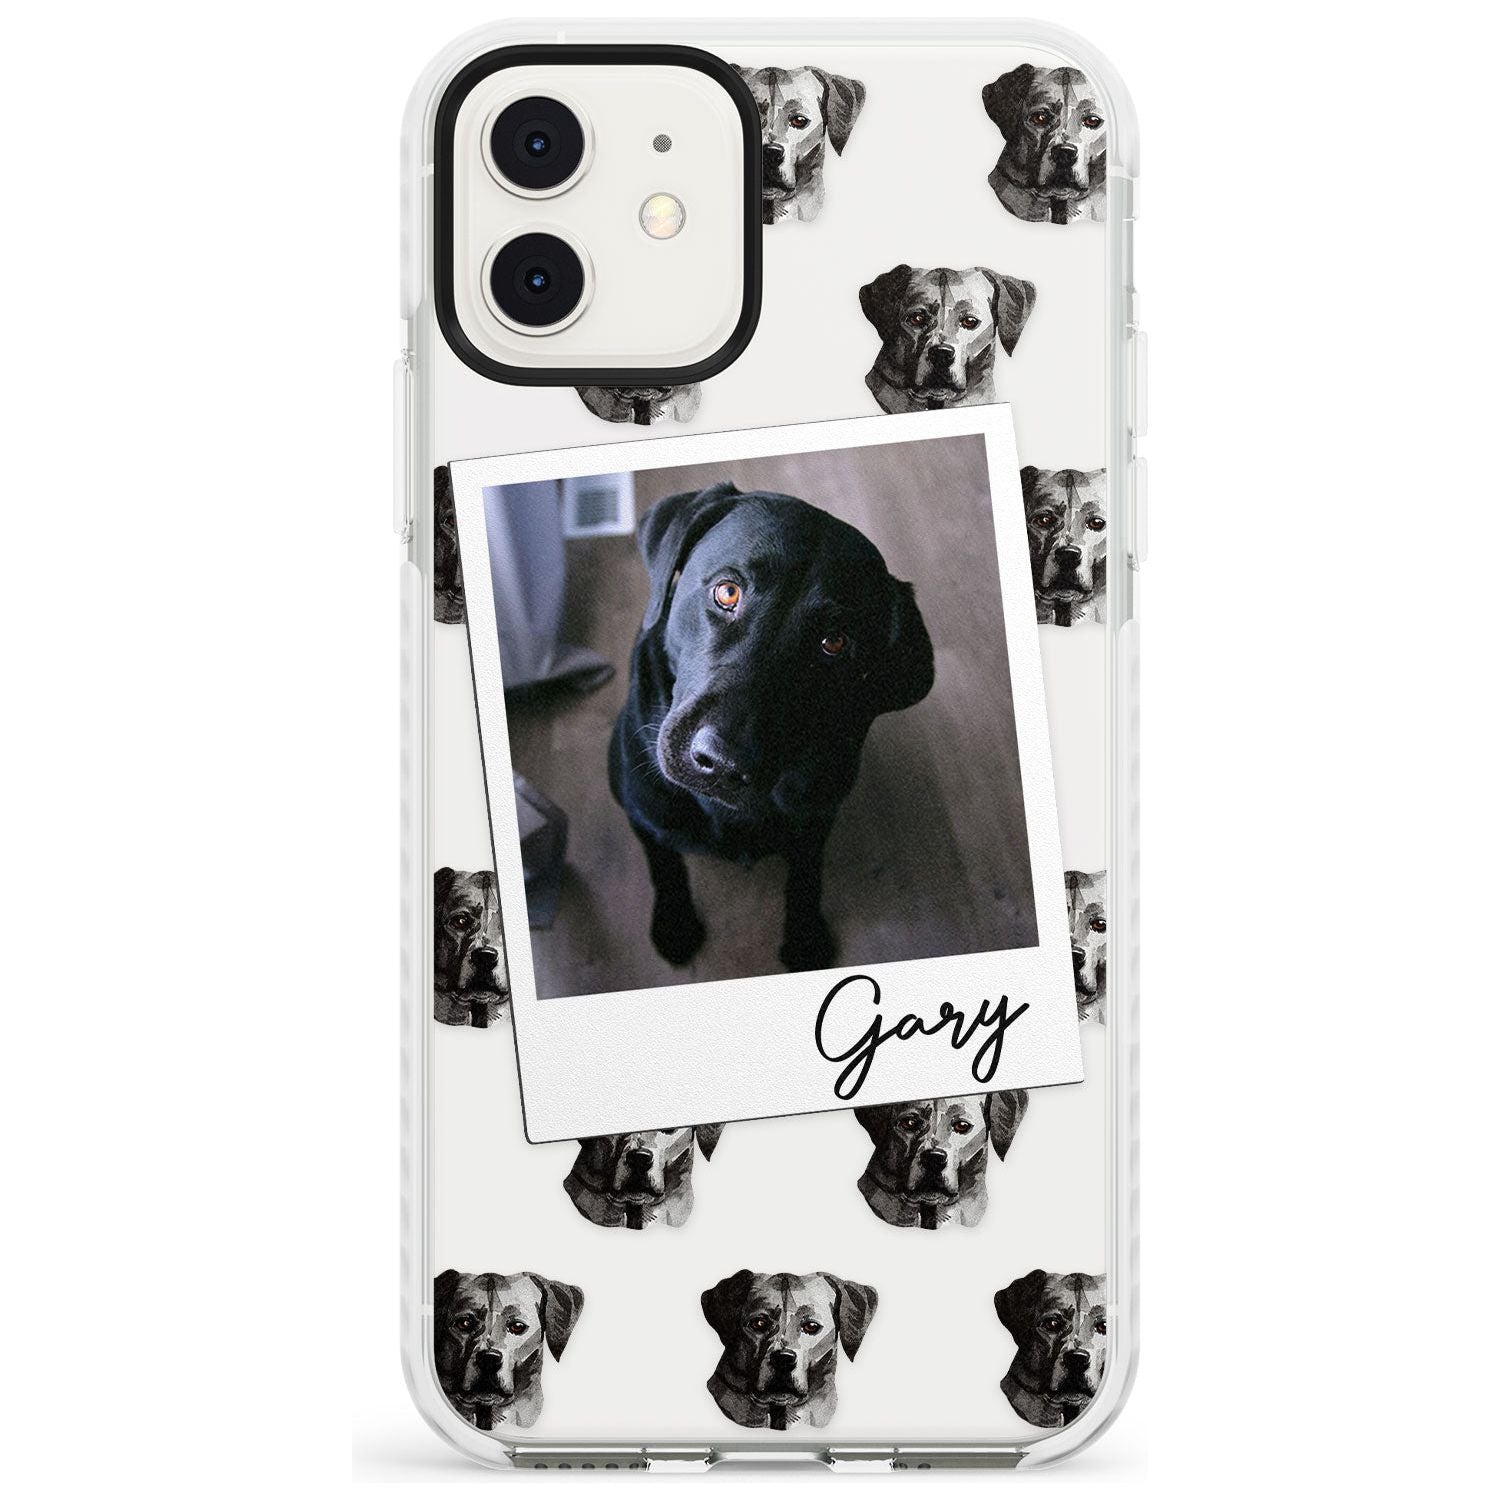 Labrador, Black - Custom Dog Photo Slim TPU Phone Case for iPhone 11